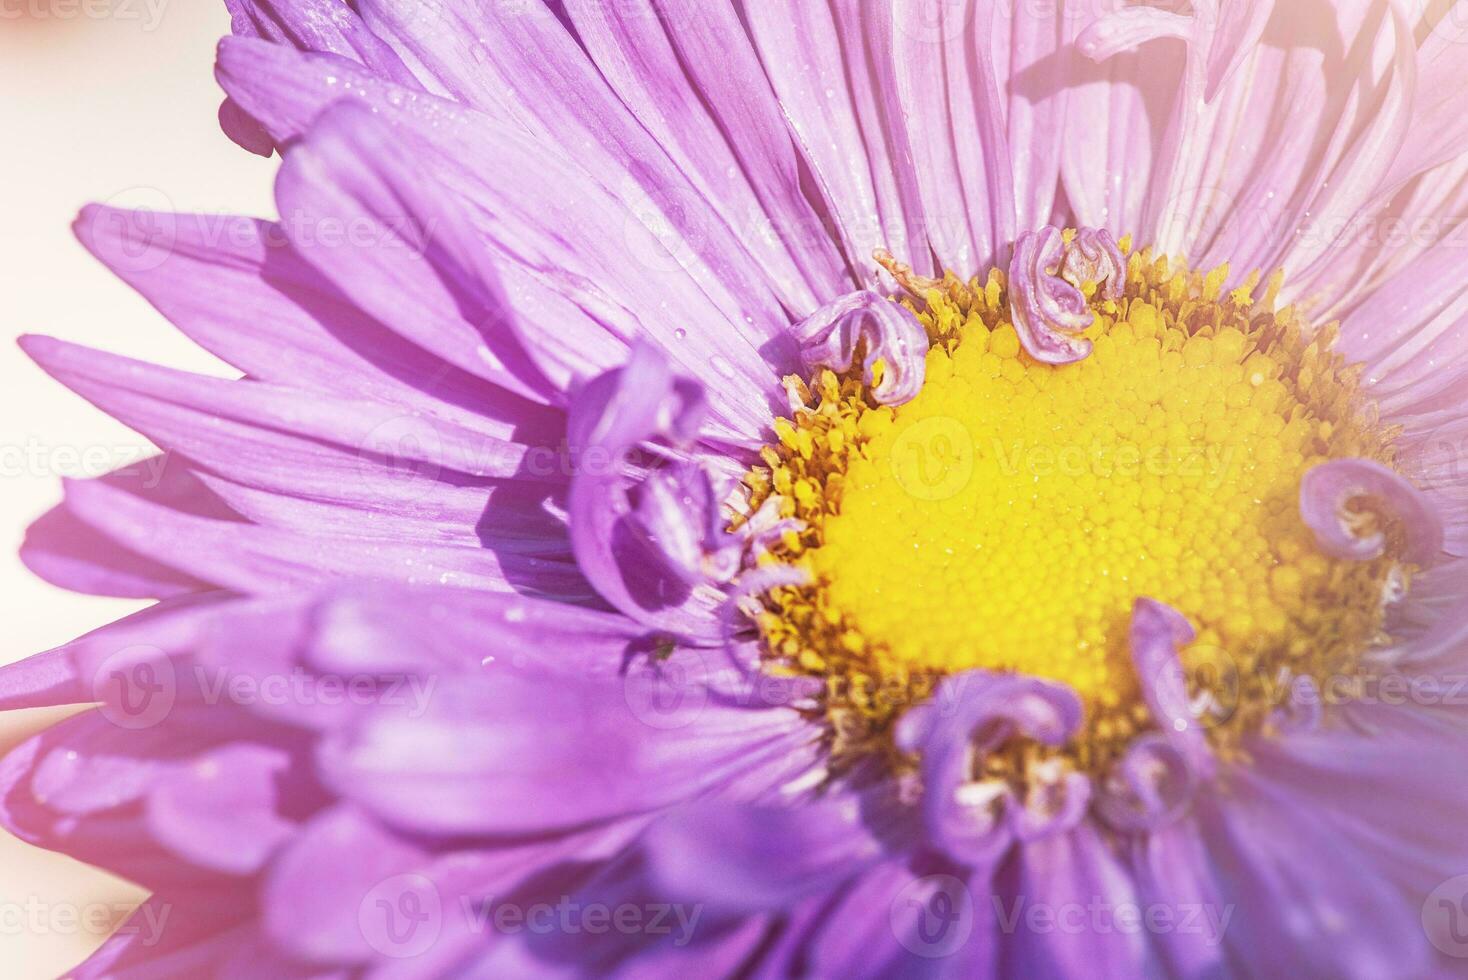 aster flor en luz de sol. macro foto de un púrpura flor.